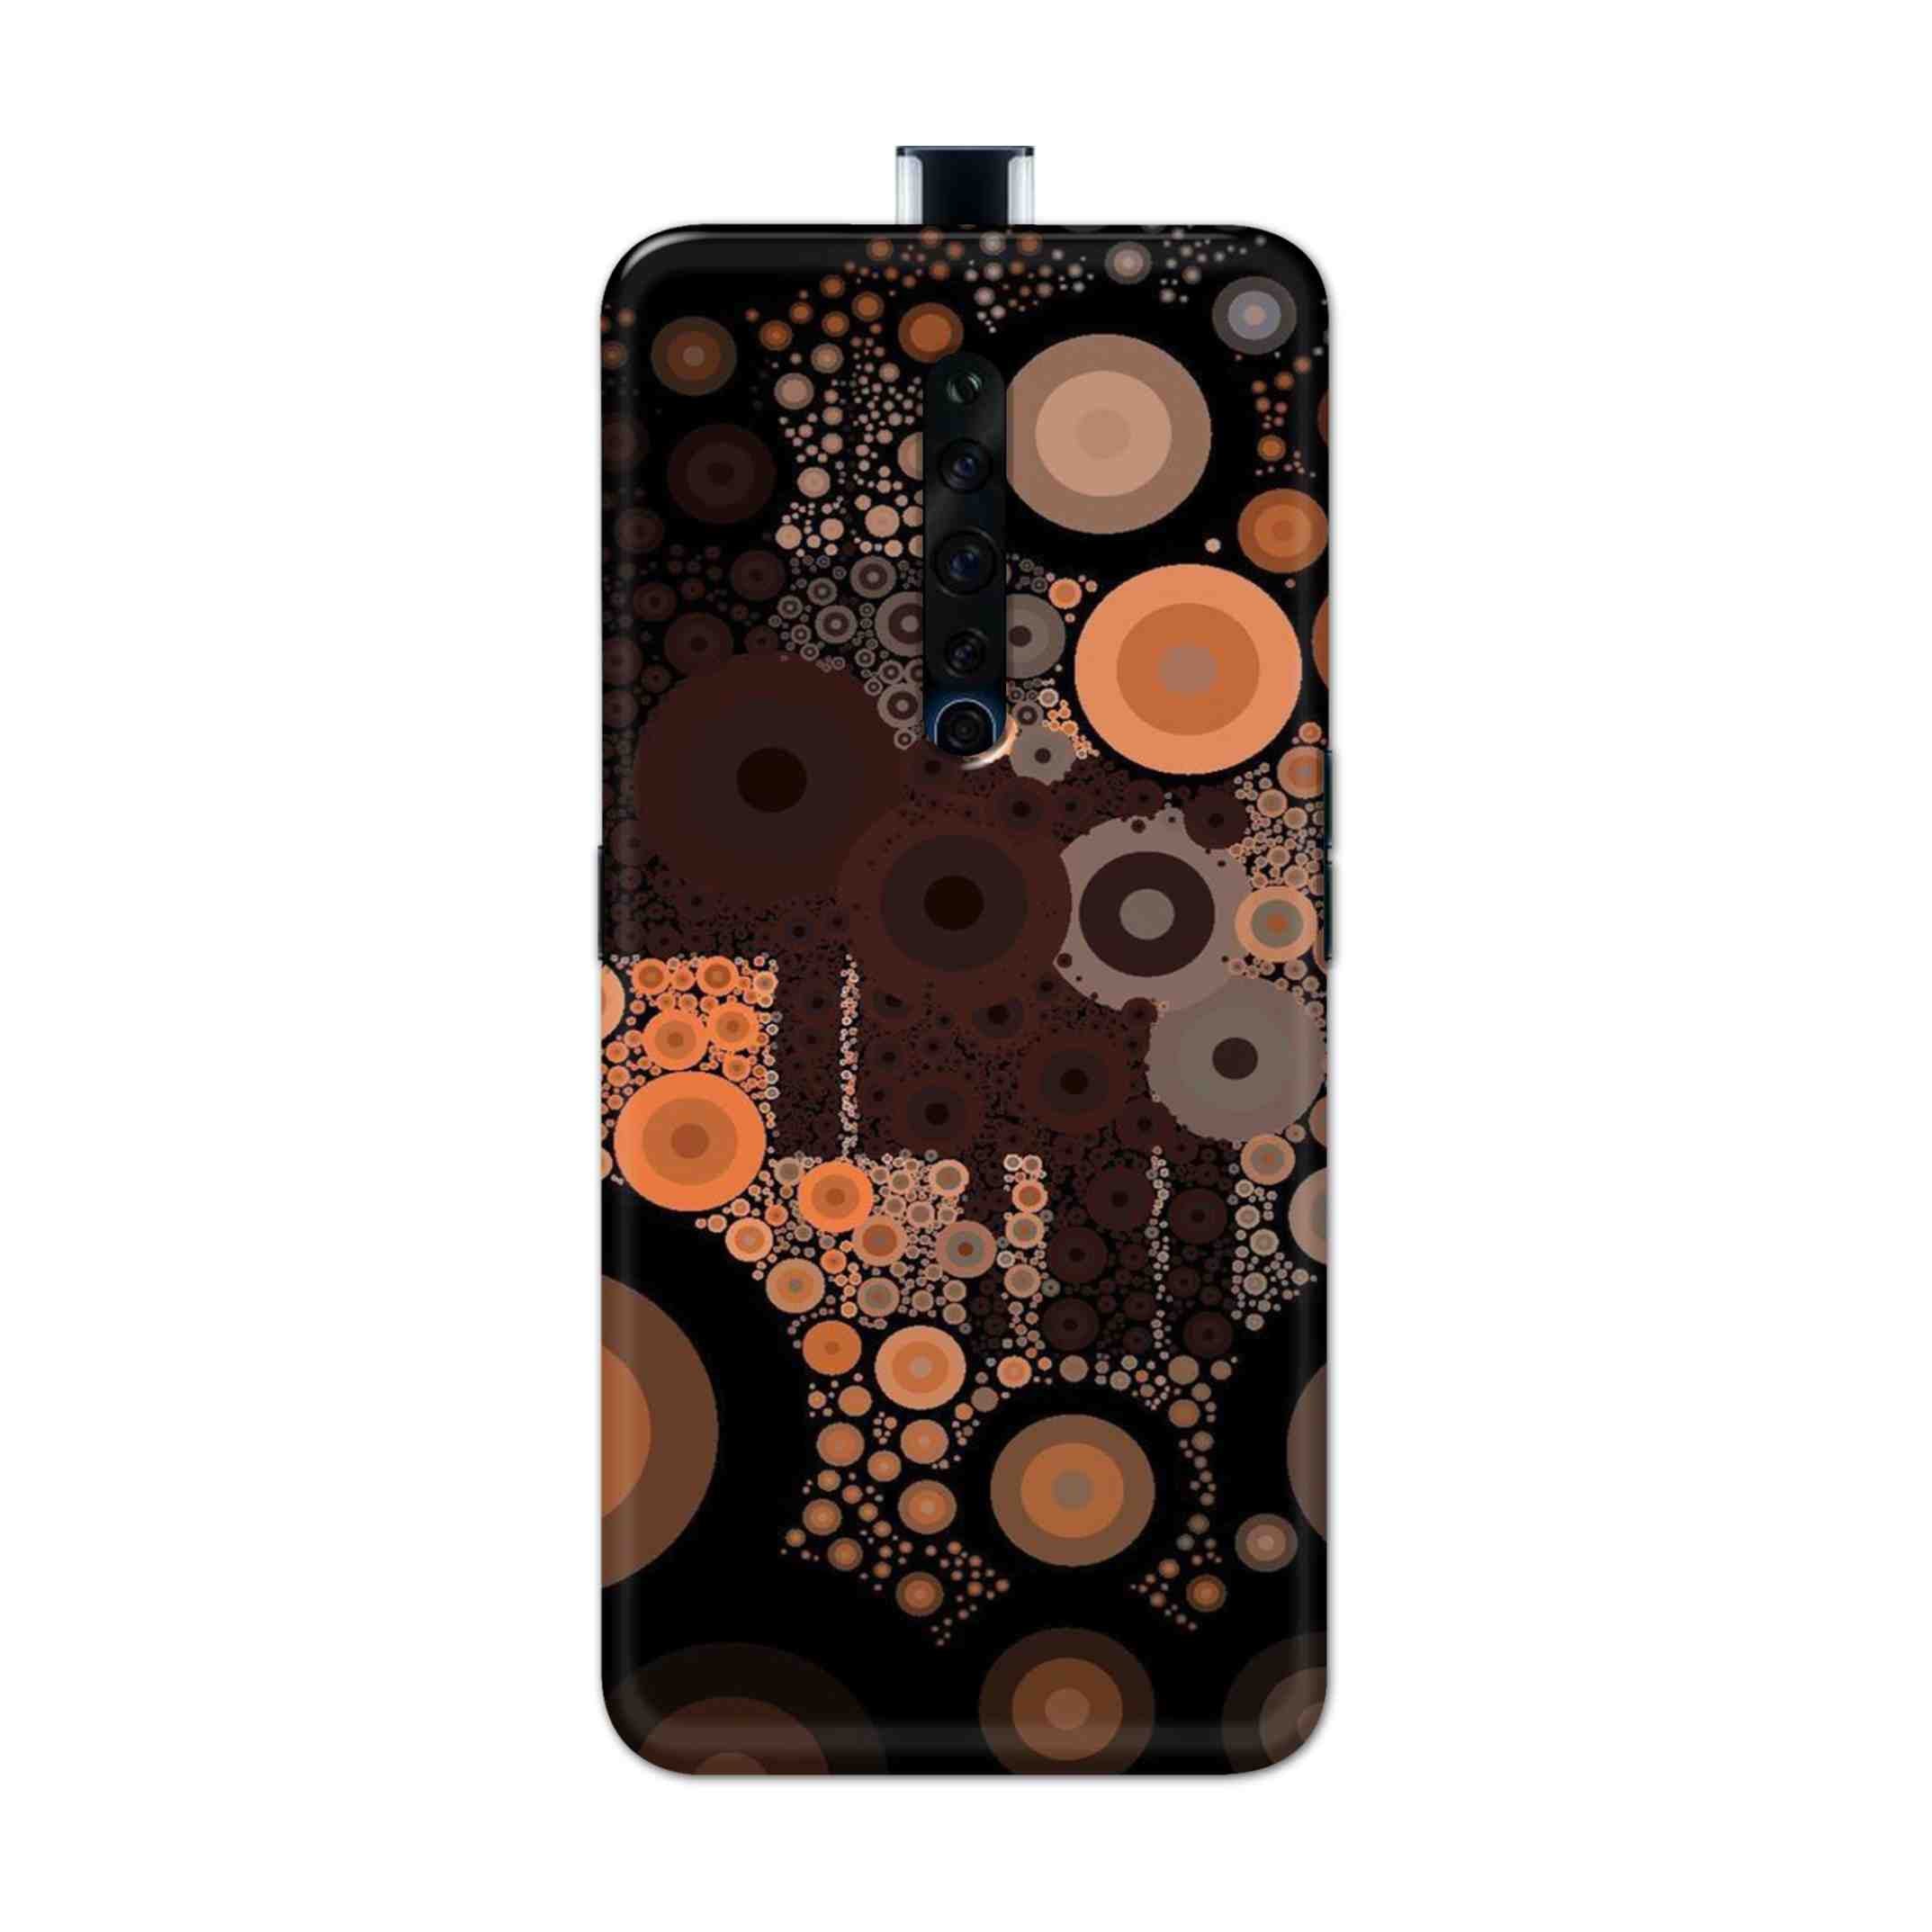 Buy Golden Circle Hard Back Mobile Phone Case Cover For Oppo Reno 2Z Online